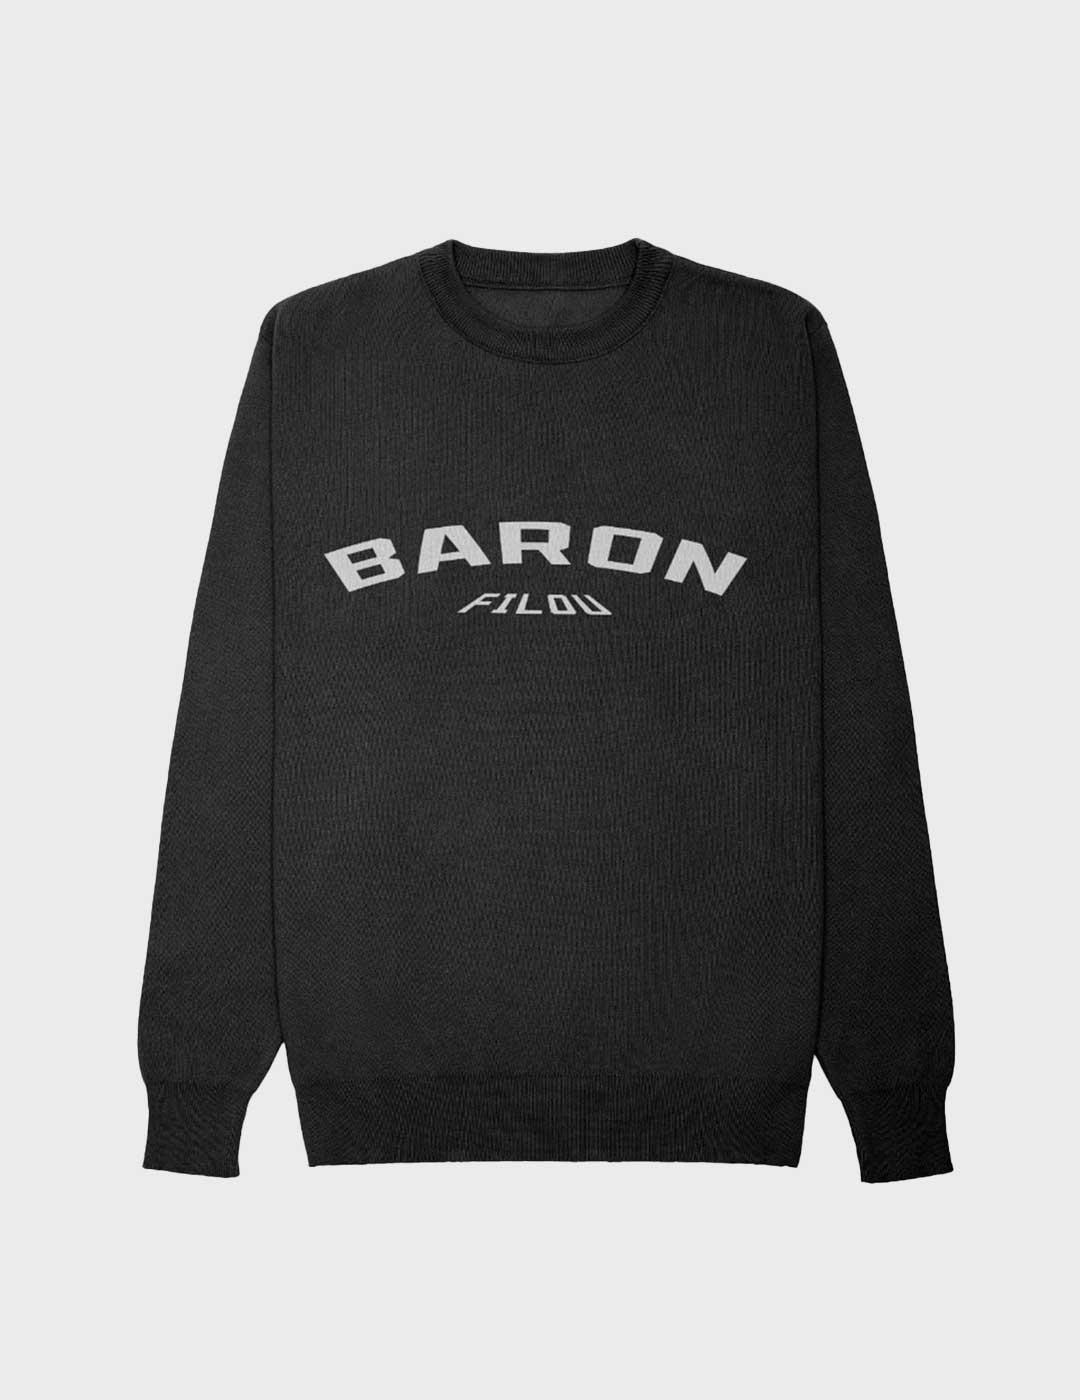 Jersey Baron Filou Knit Pullover negro unisex